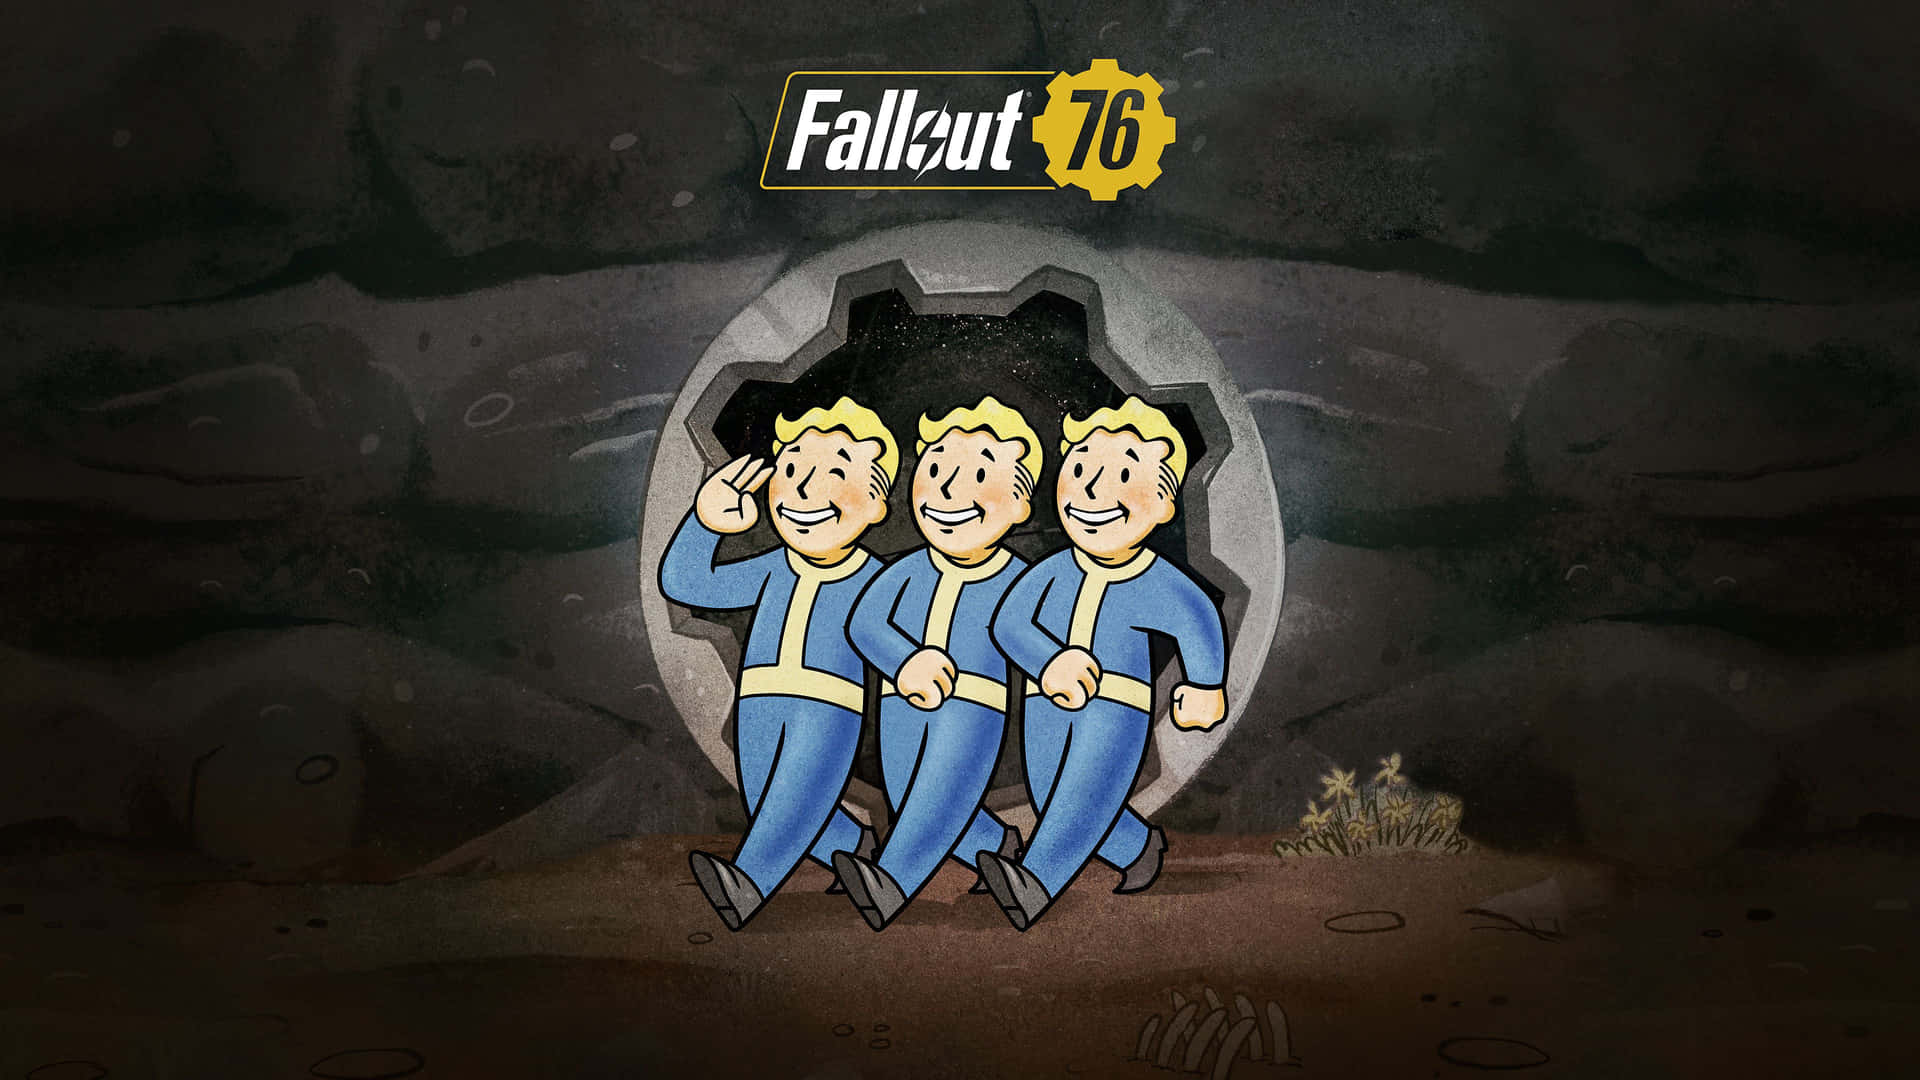 Fallout76 Bakgrundsbild.